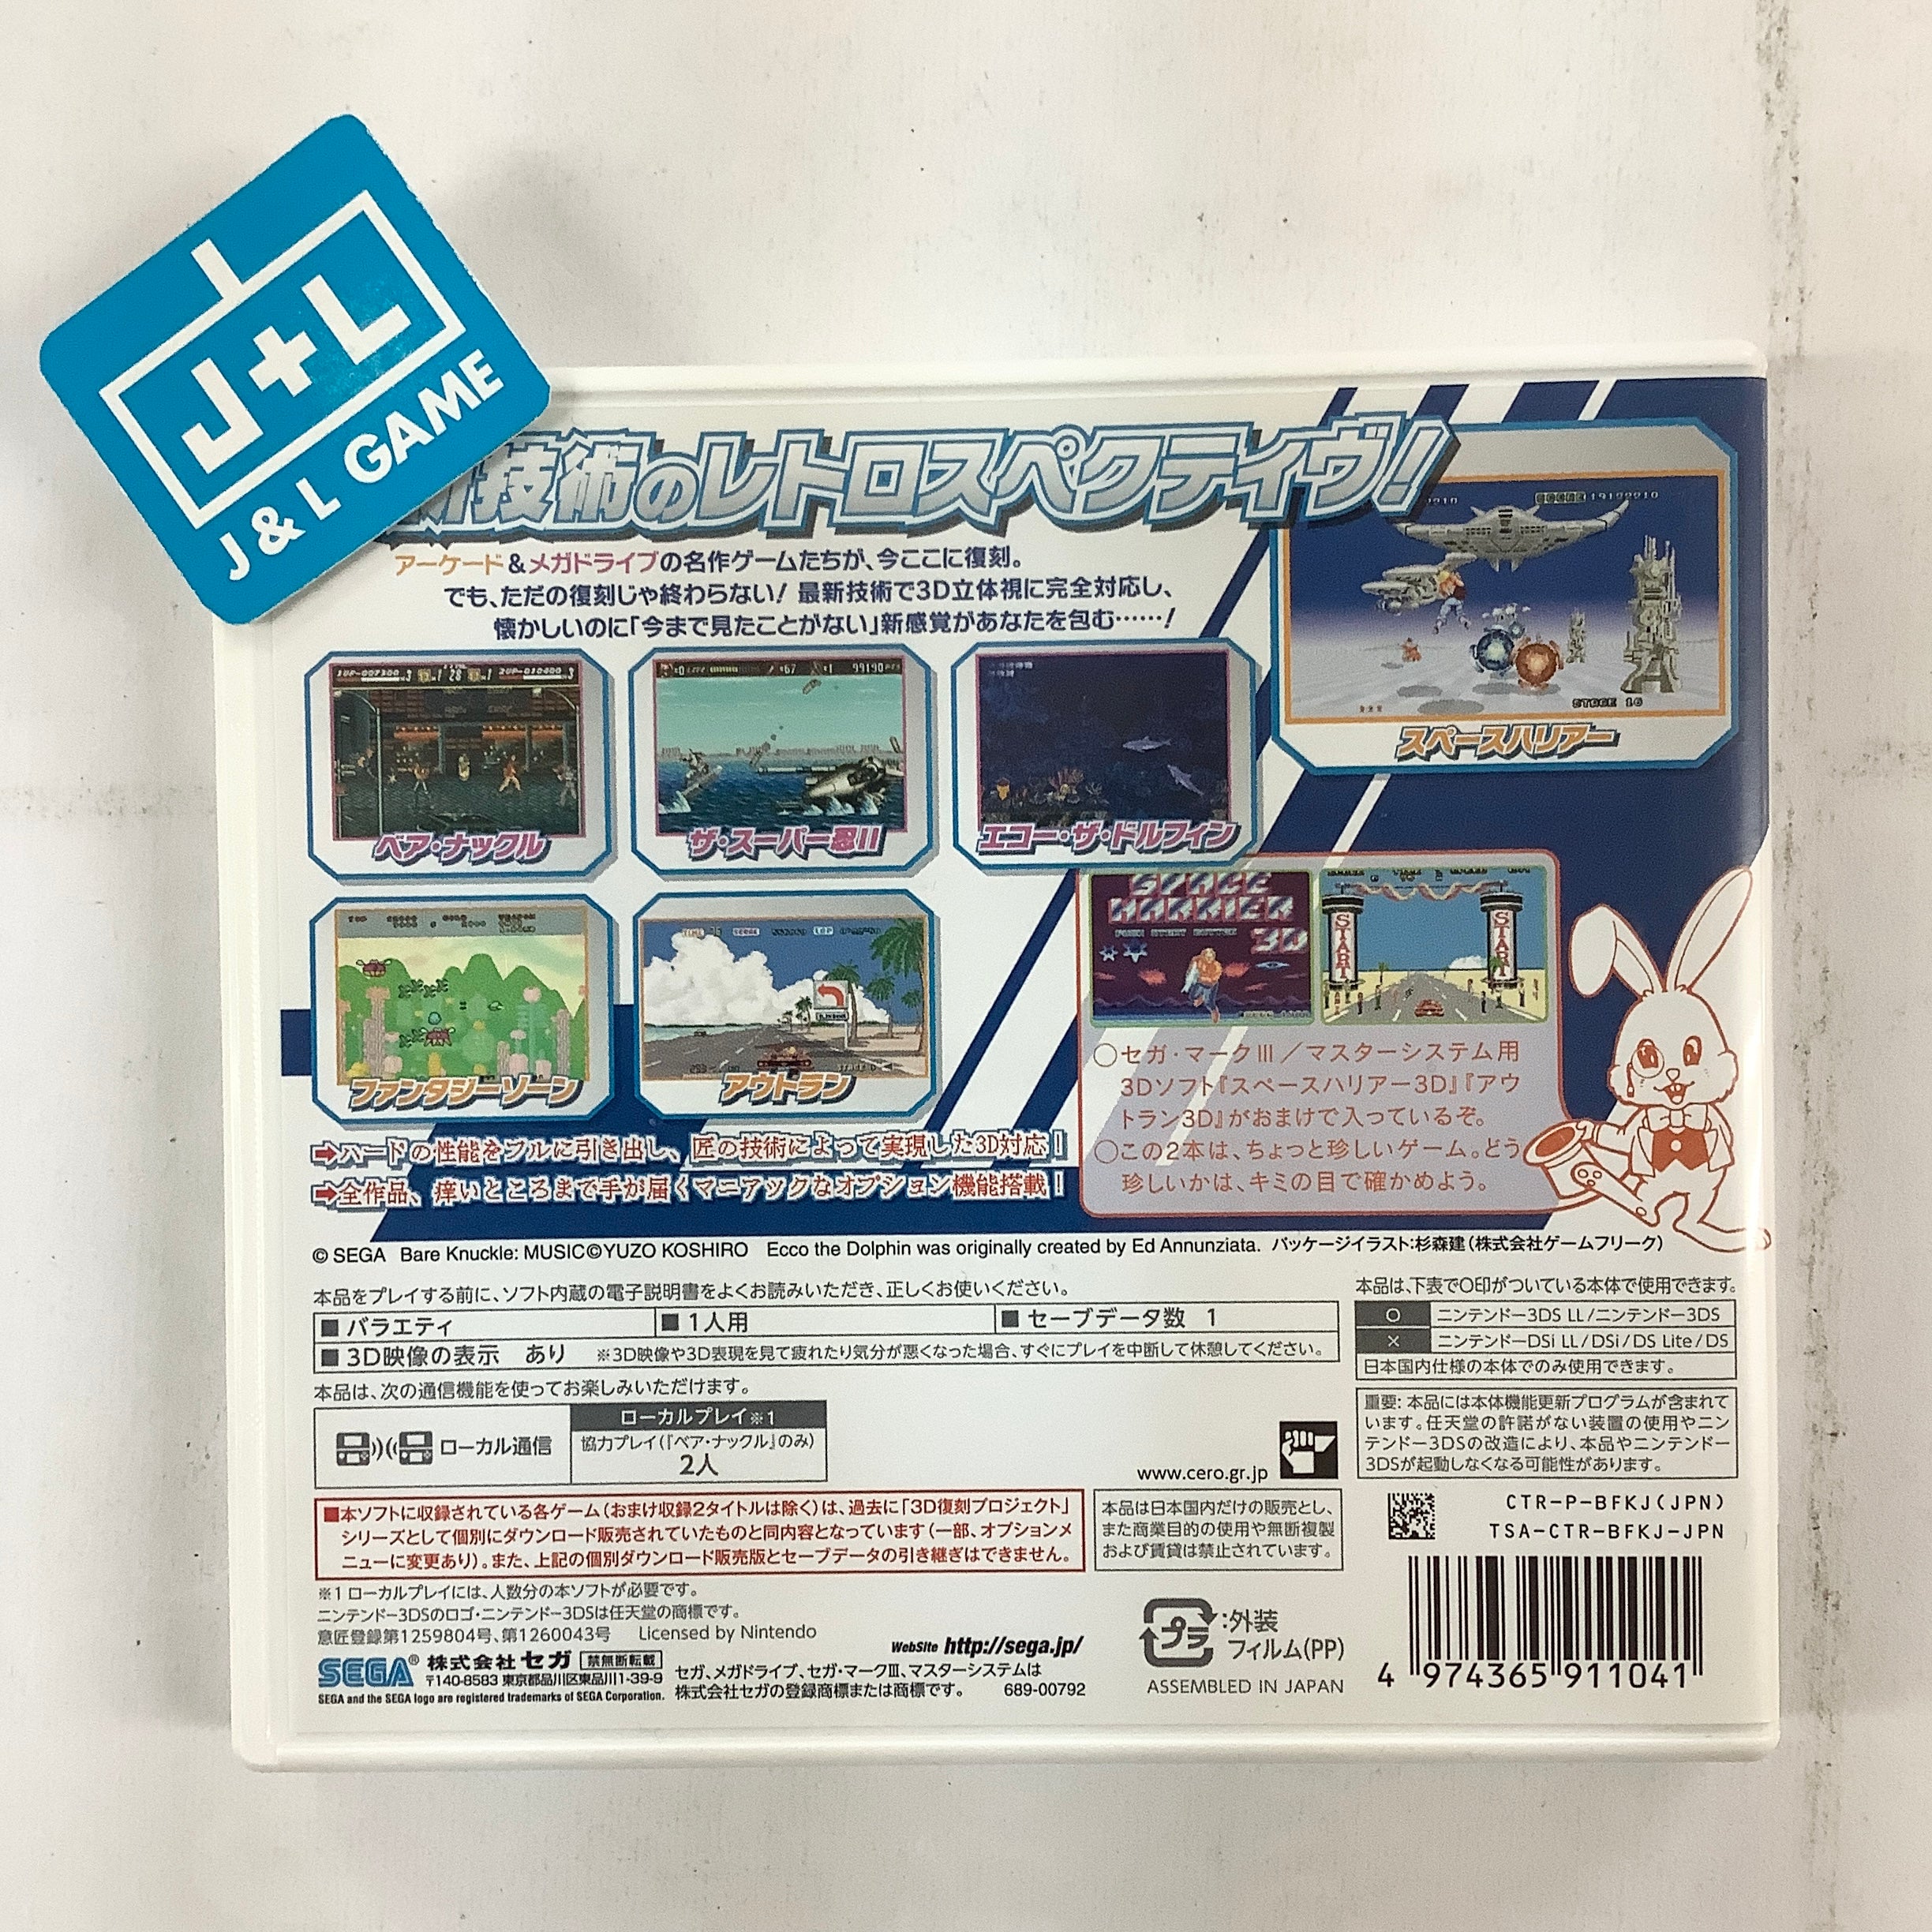 Sega 3D Fukkoku Archives - Nintendo 3DS [Pre-Owned] (Japanese Import) Video Games Sega   